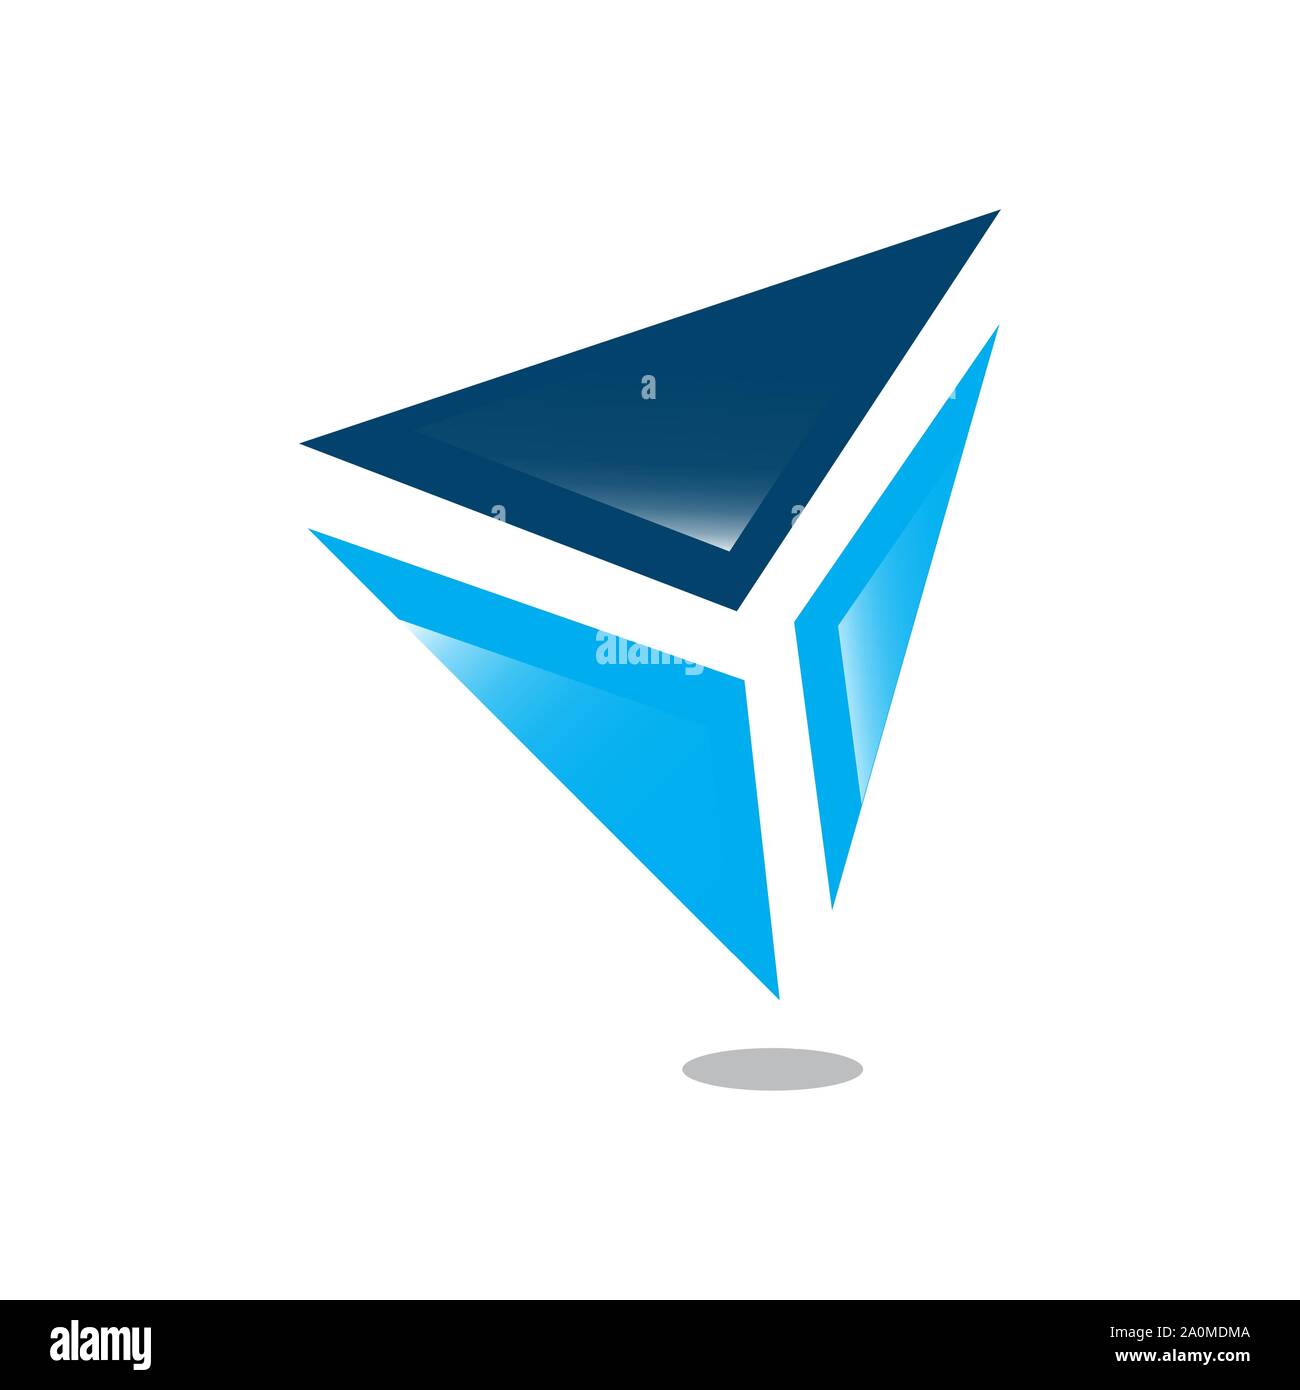 Forma geometrica prisma a triangolo Logo Design illustrazione vettoriale Illustrazione Vettoriale